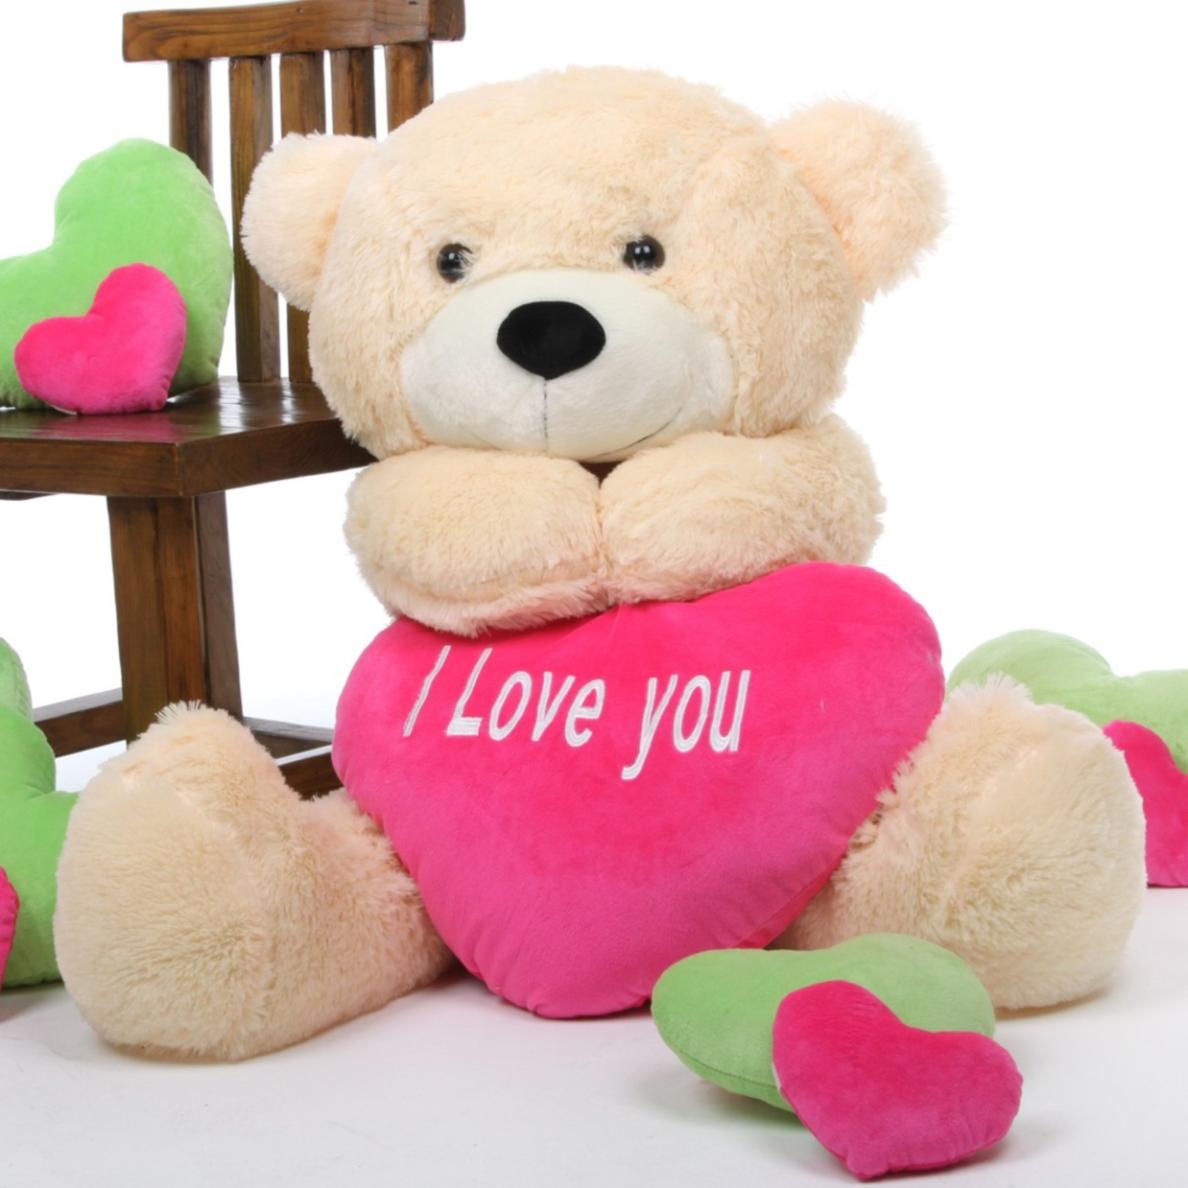 Love You Teddy Bear - 1188x1188 Wallpaper 